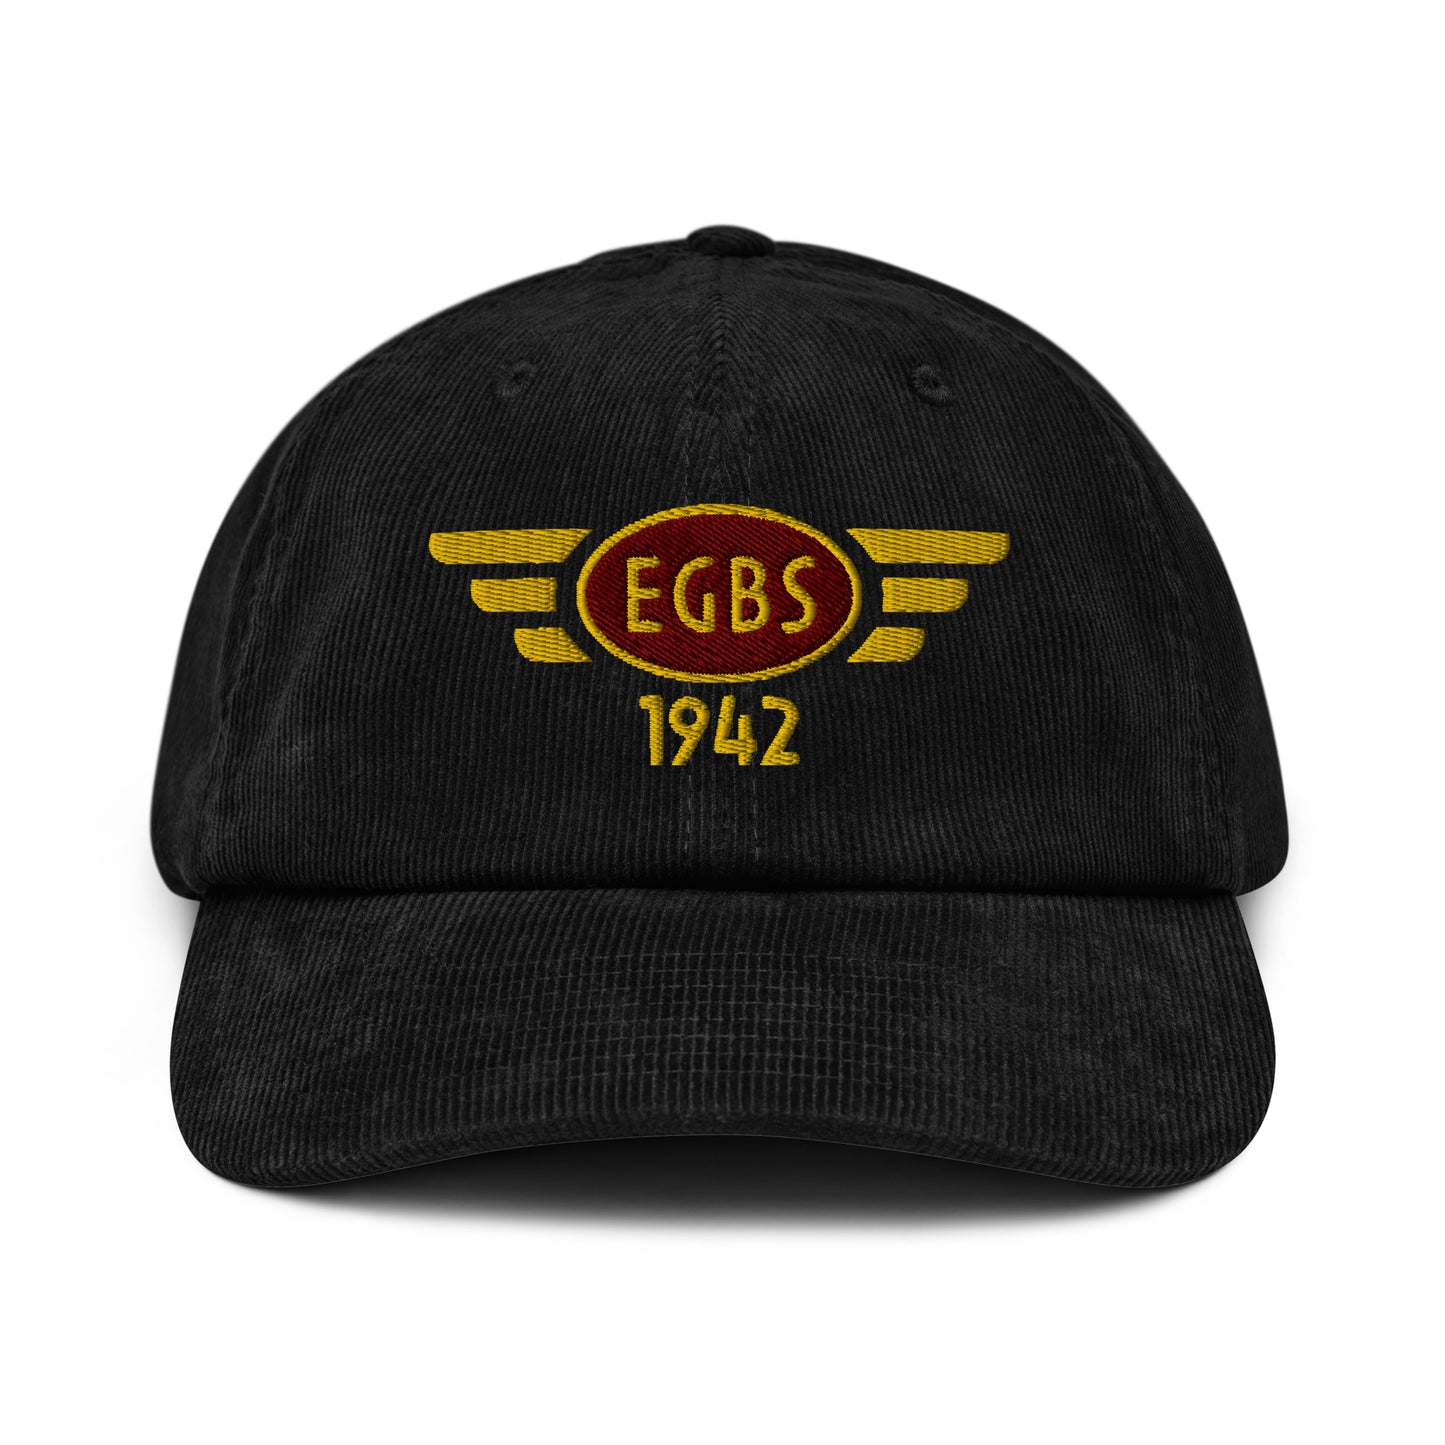 Black corduroy baseball cap with embroidered vintage style aviation logo for Shobdon Aerodrome.